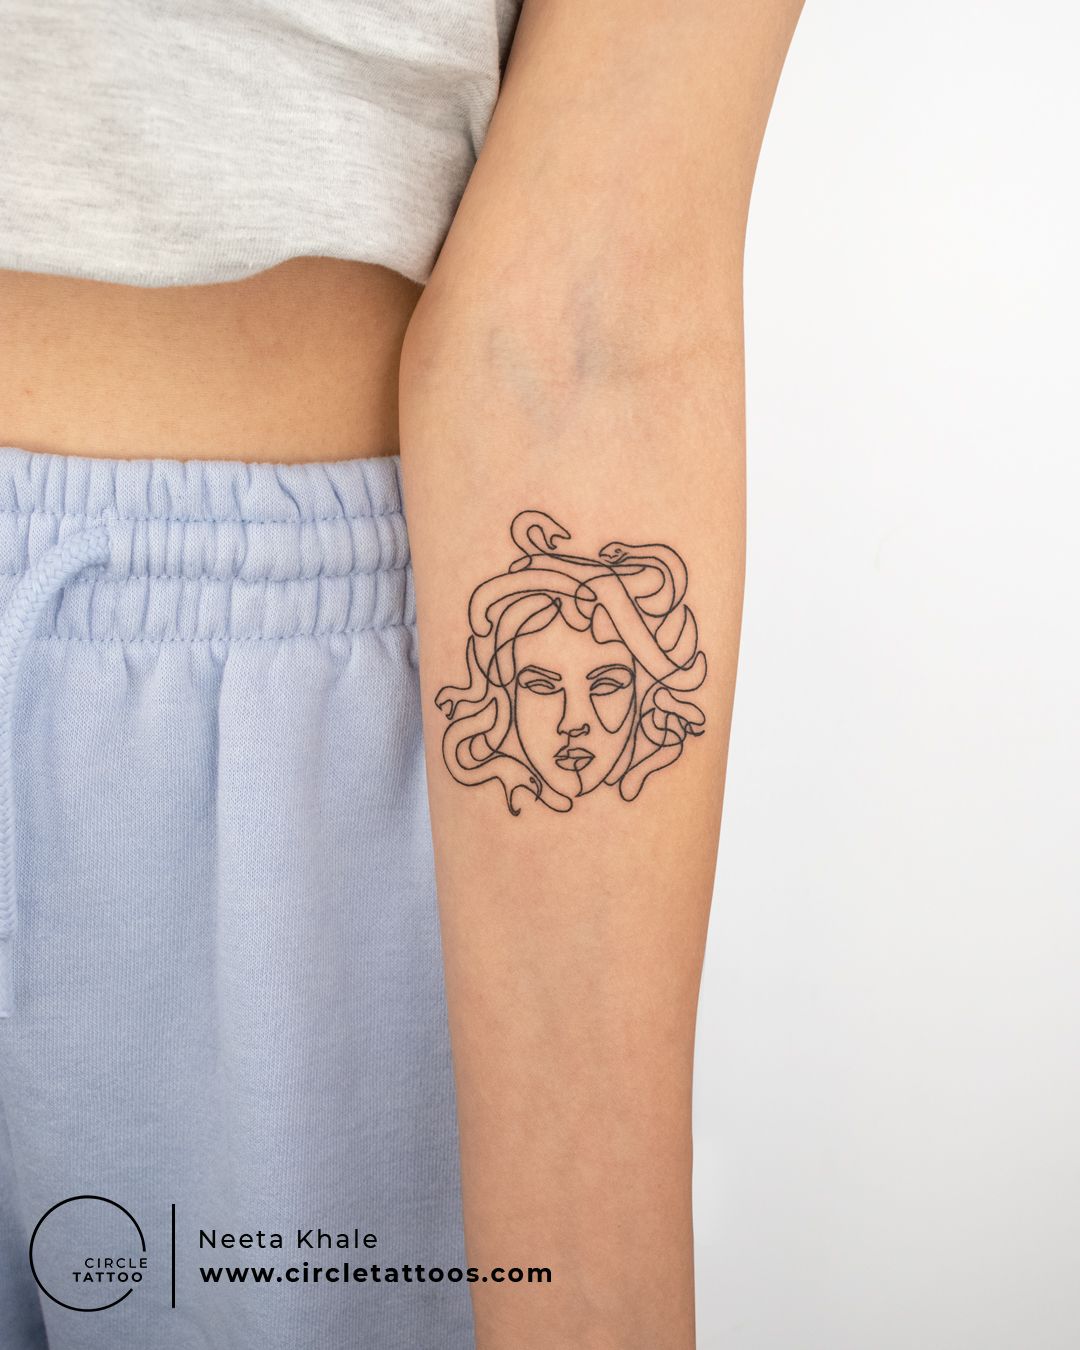 Medusa tattoo ideas | Medusa tattoo design, Discreet tattoos, Dope tattoos  for women